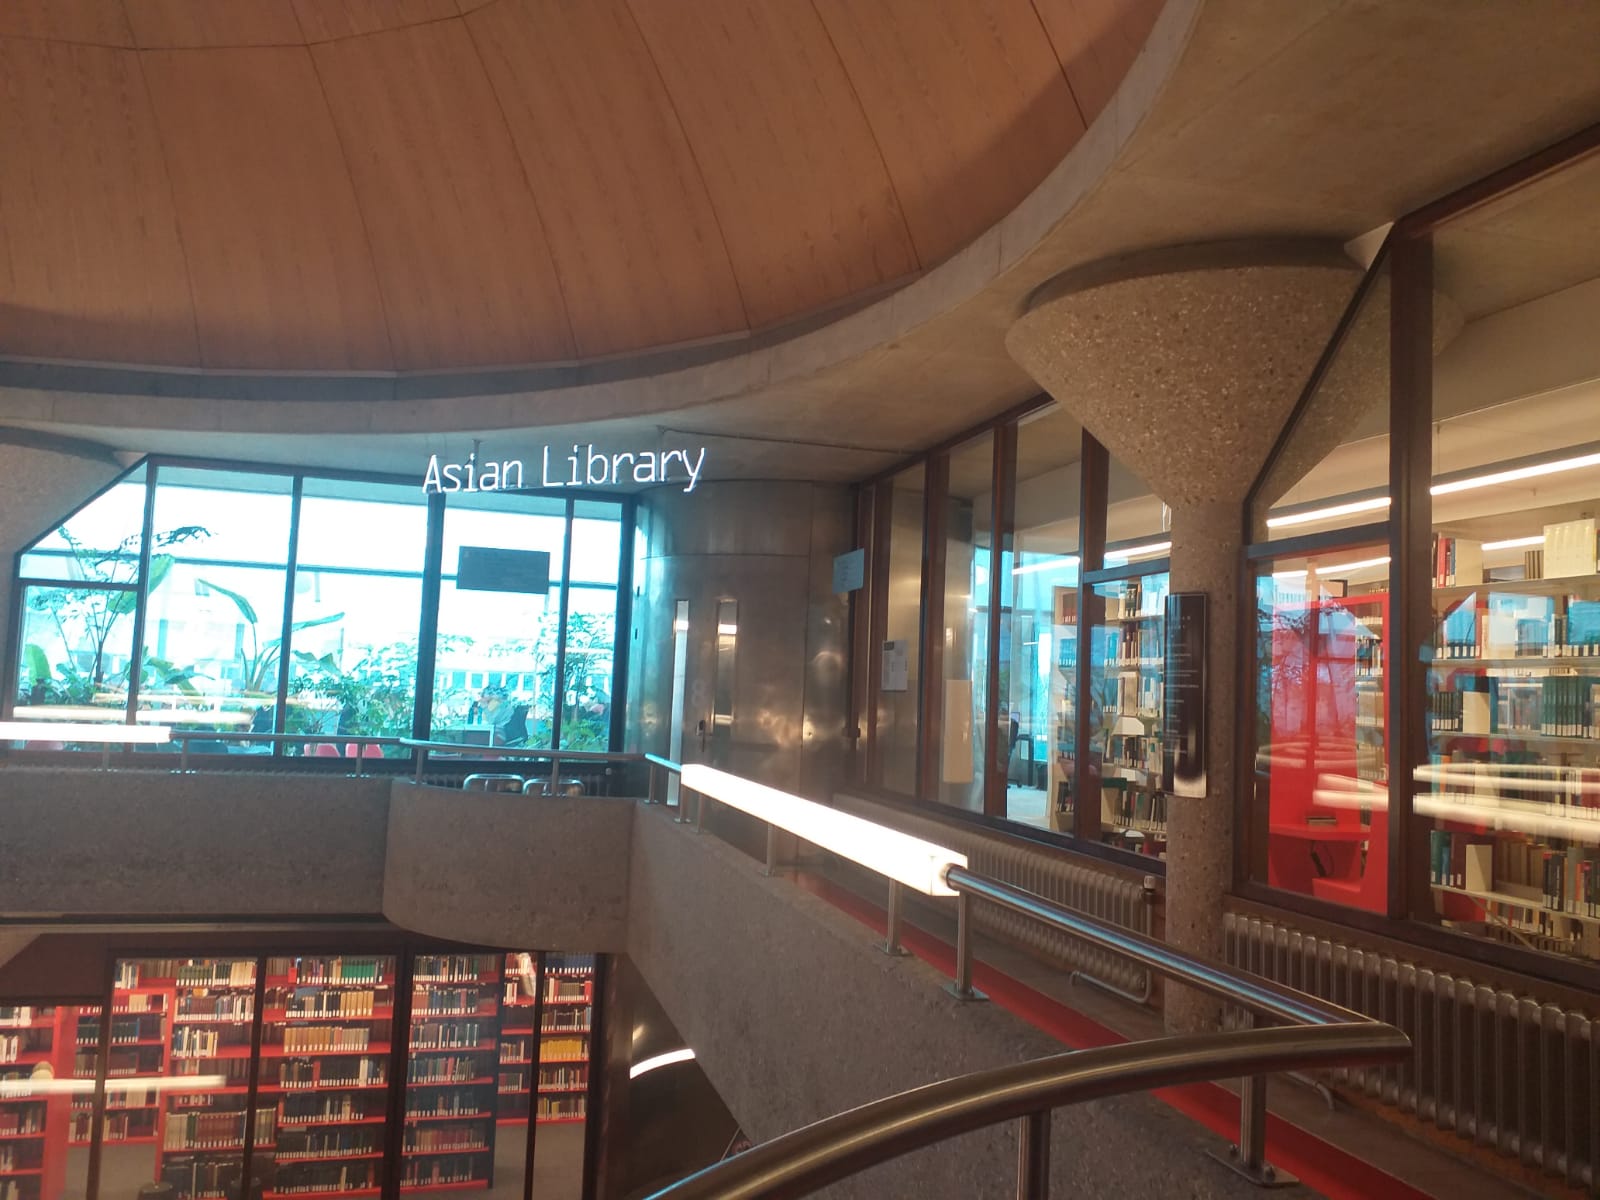 Kunjungan ke Perpustakaan Universitas Leiden, Belanda